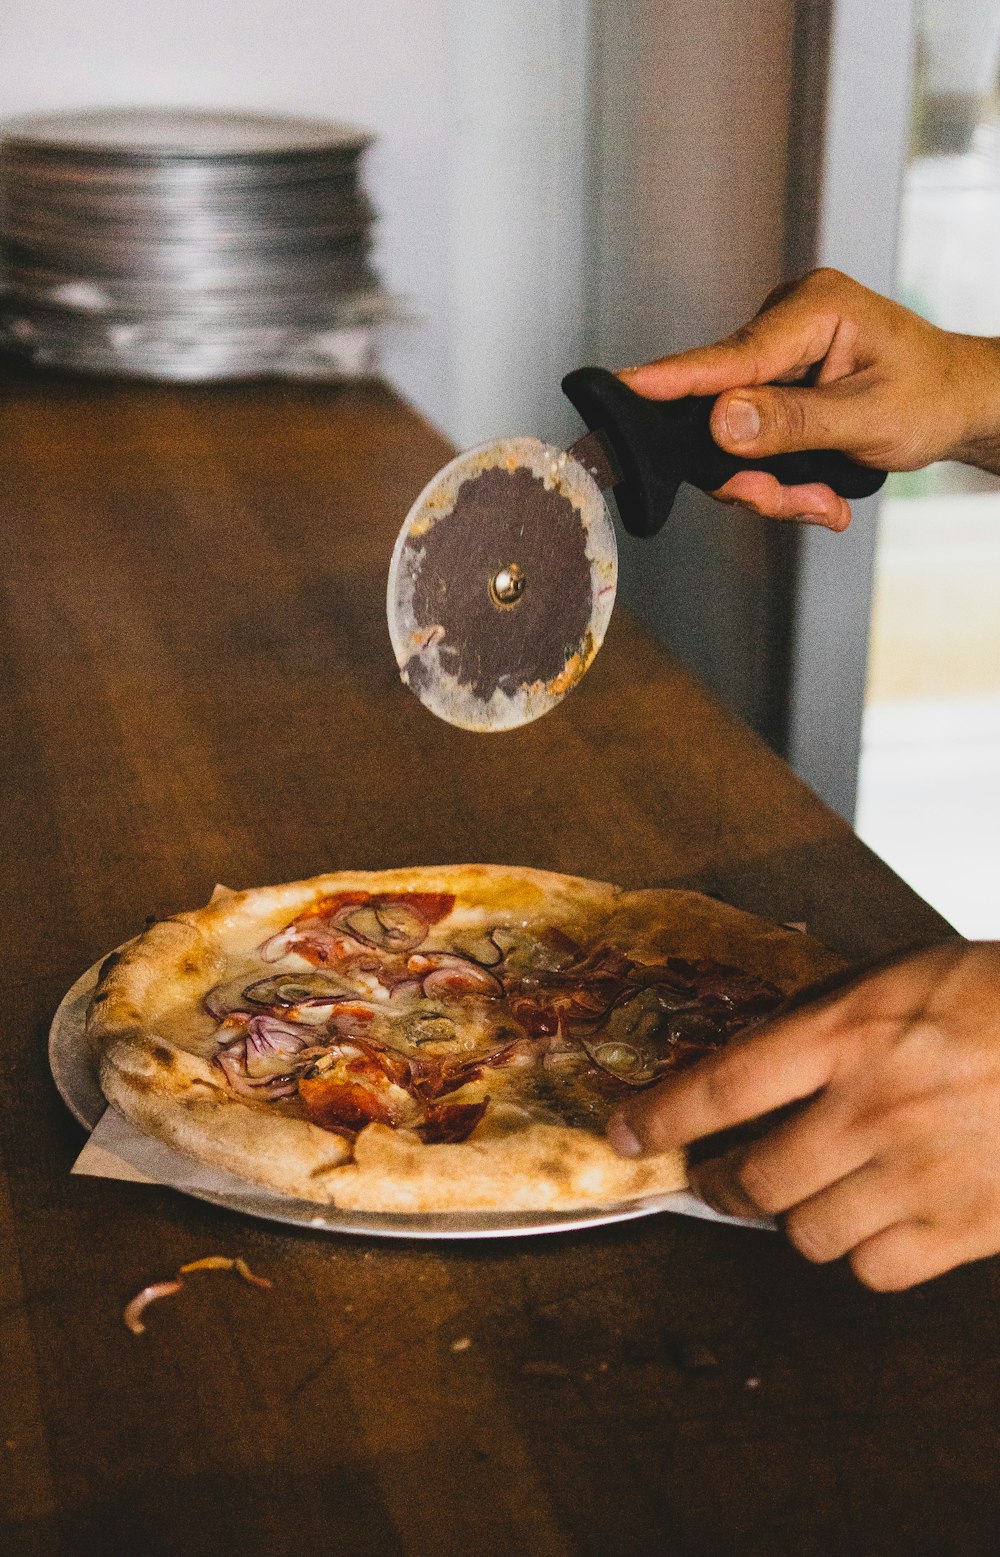 persona sosteniendo la cortadora de pizza sobre la pizza